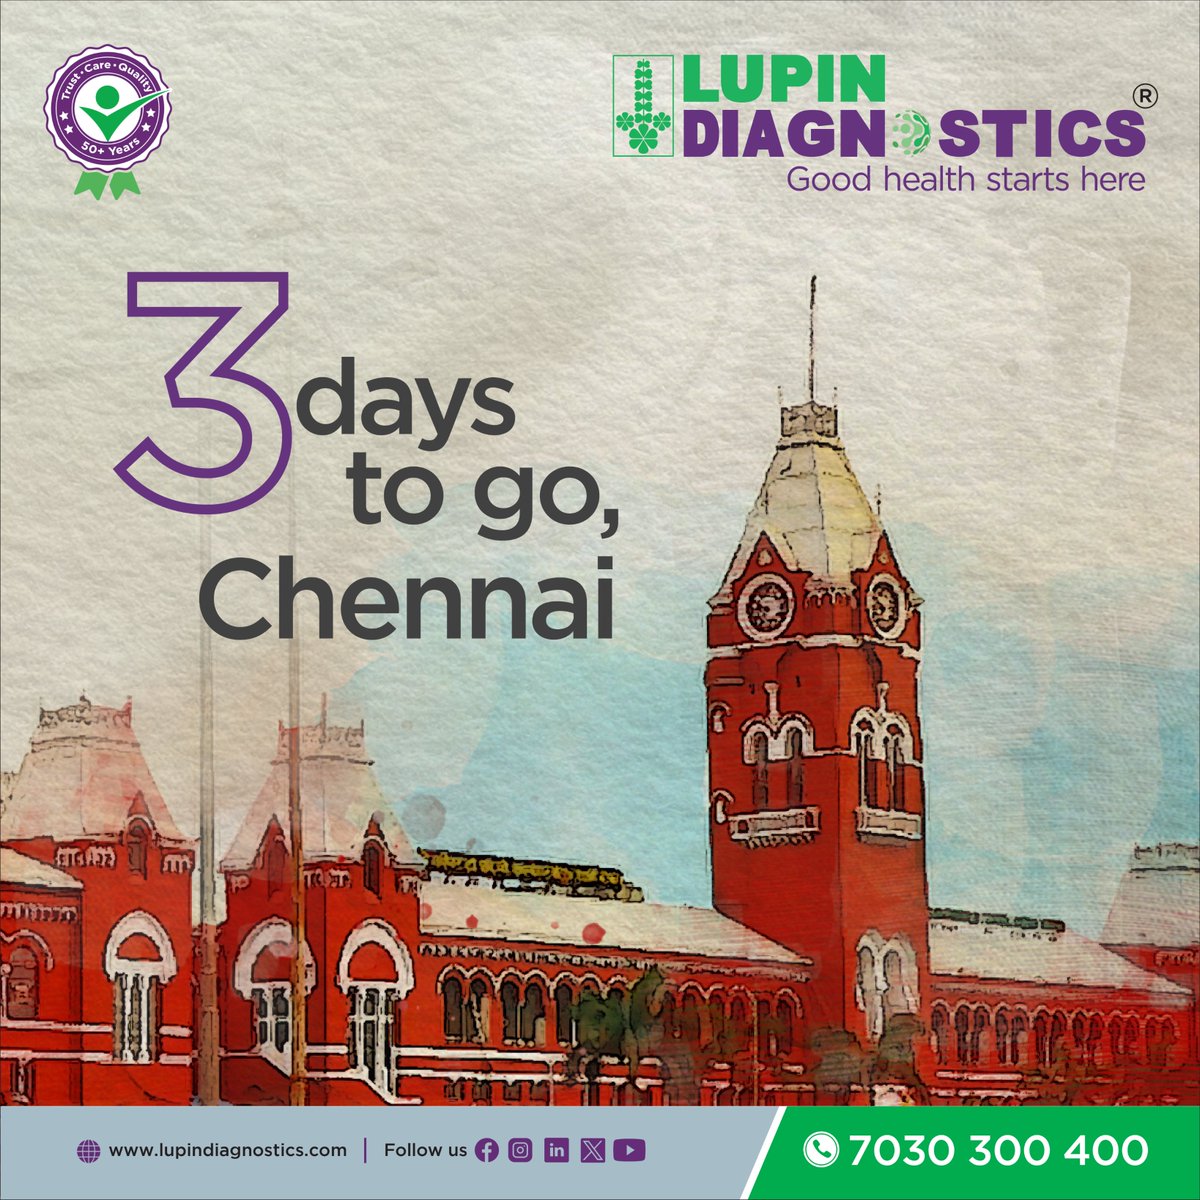 3 days to go....Chennai.

#chennai #lupindiagnostics
.
.
.
.
.
#goodhealthstartshere #diagnostics #pathology #healthcare #diagnosticcentre #health #healthylifestyle #care #BeWiseHealthWise #tamilnadu